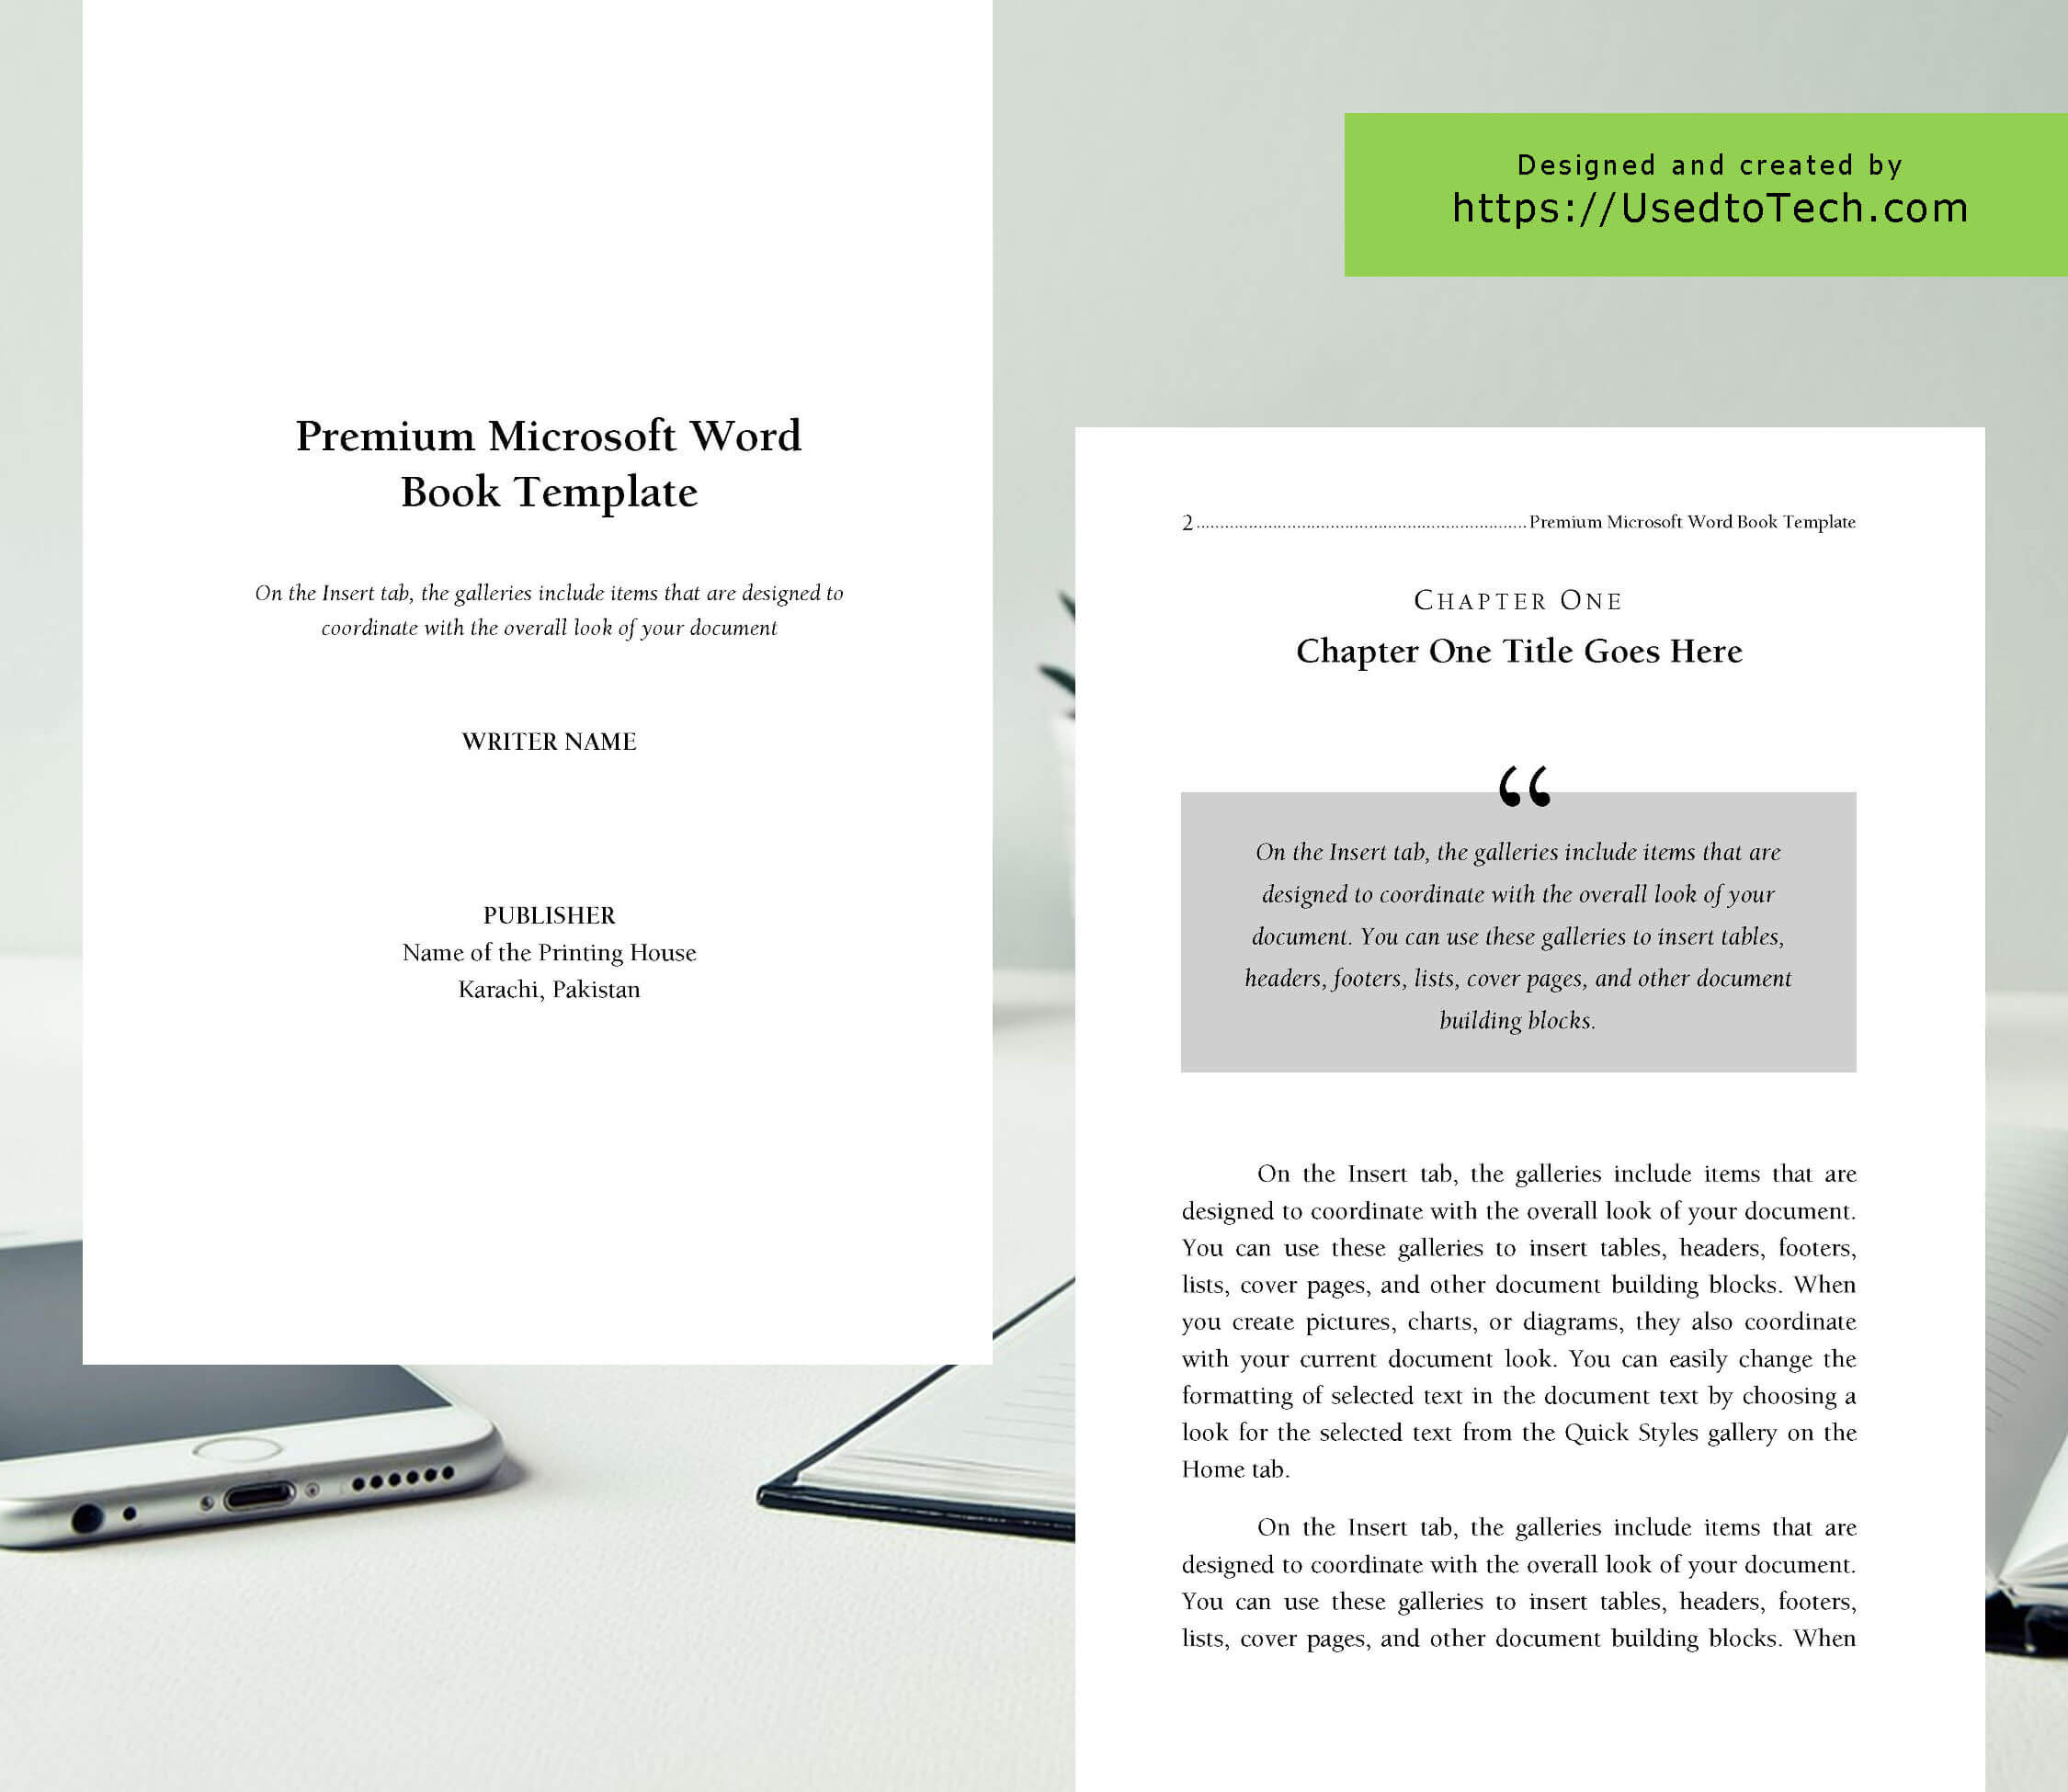 Premium & Free 6 X 9 Book Template For Microsoft Word - Used With Regard To 6X9 Book Template For Word